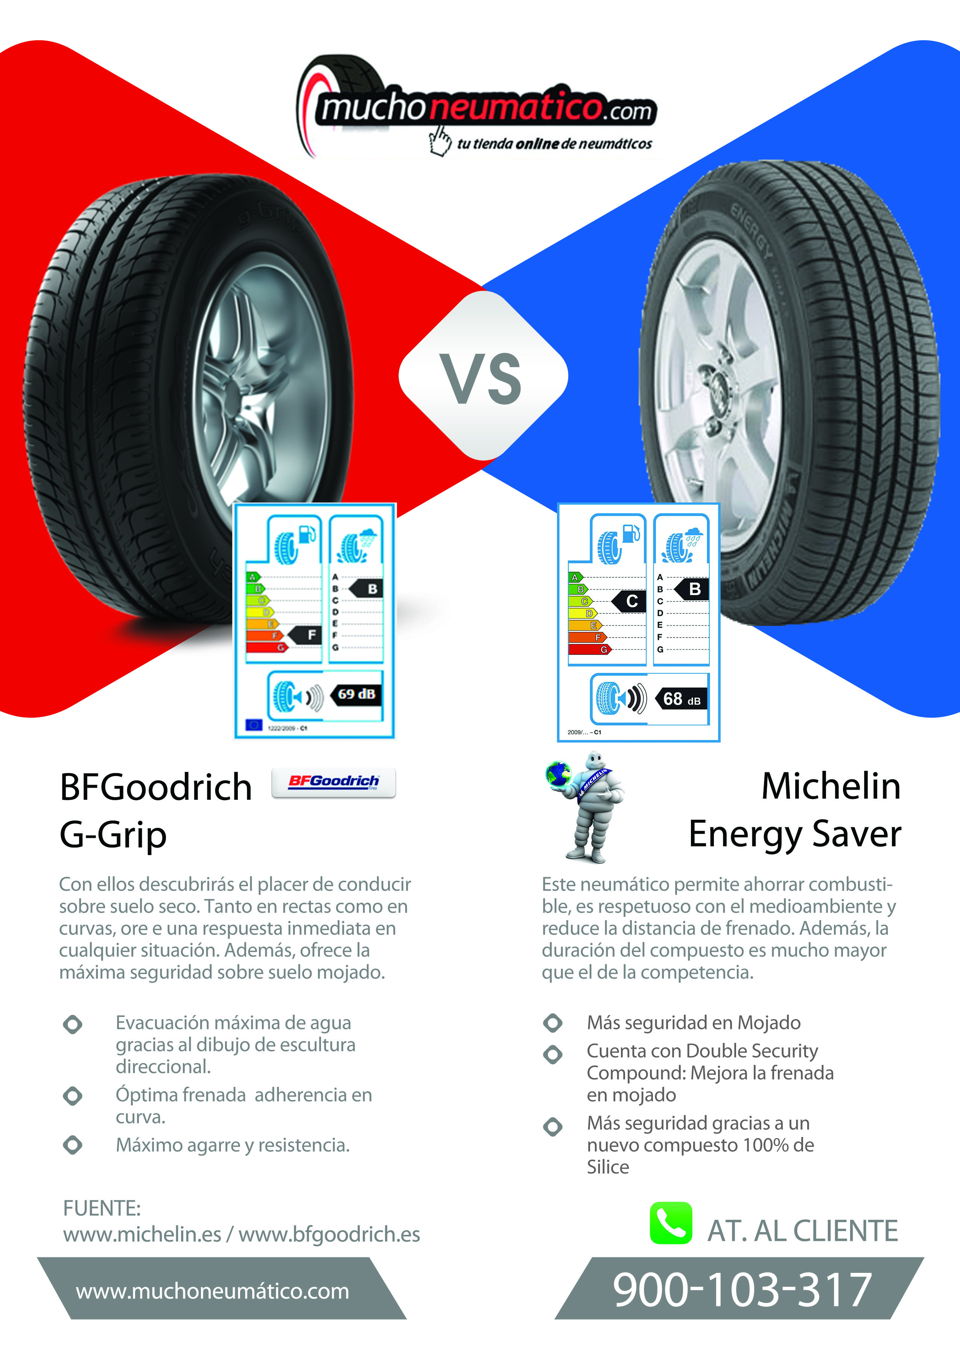 BF Goodrich G-Grip Vs Michelin